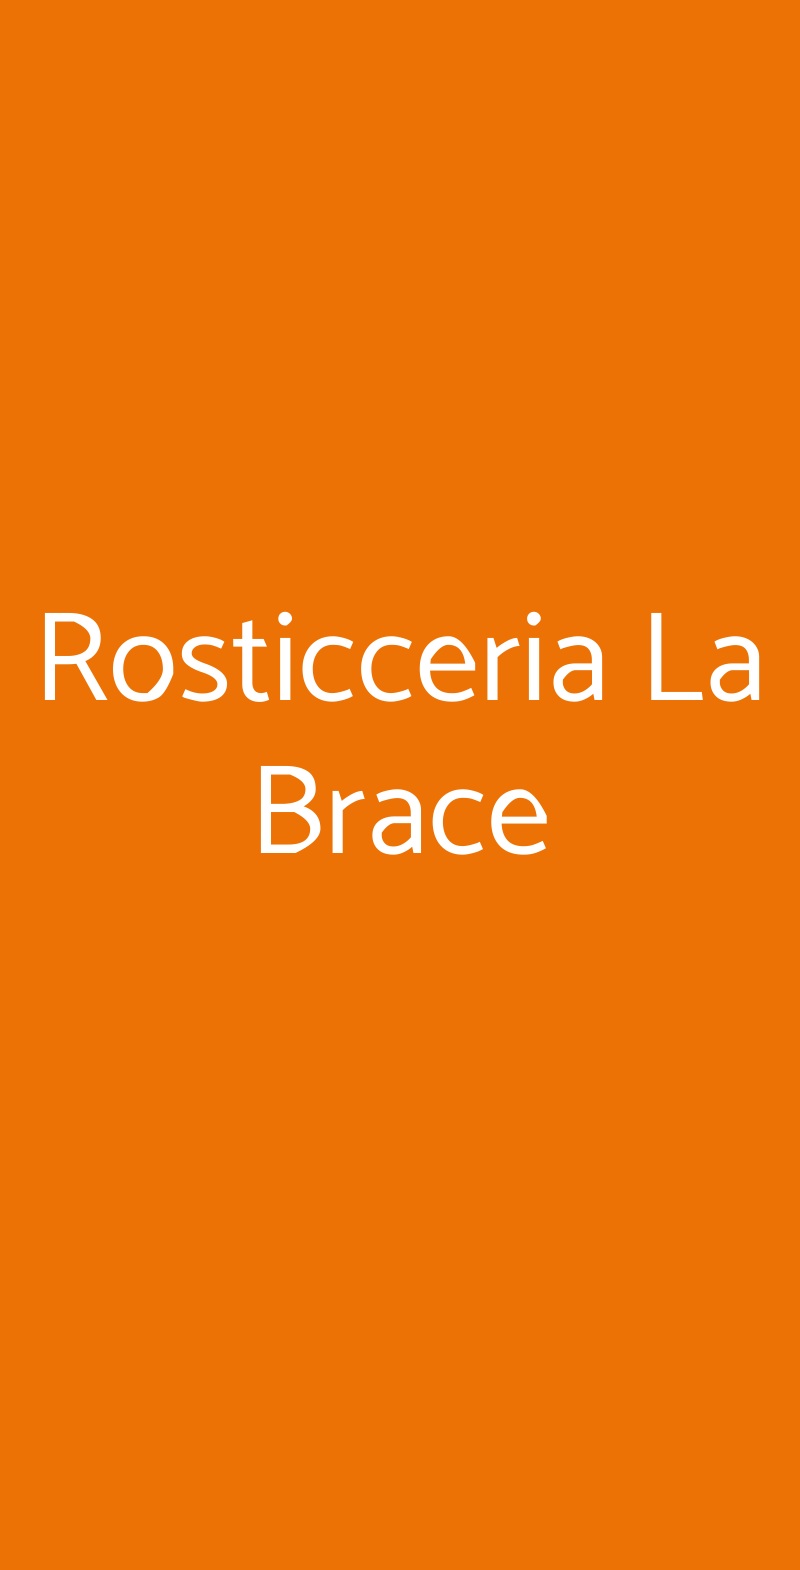 Rosticceria La Brace Arezzo menù 1 pagina